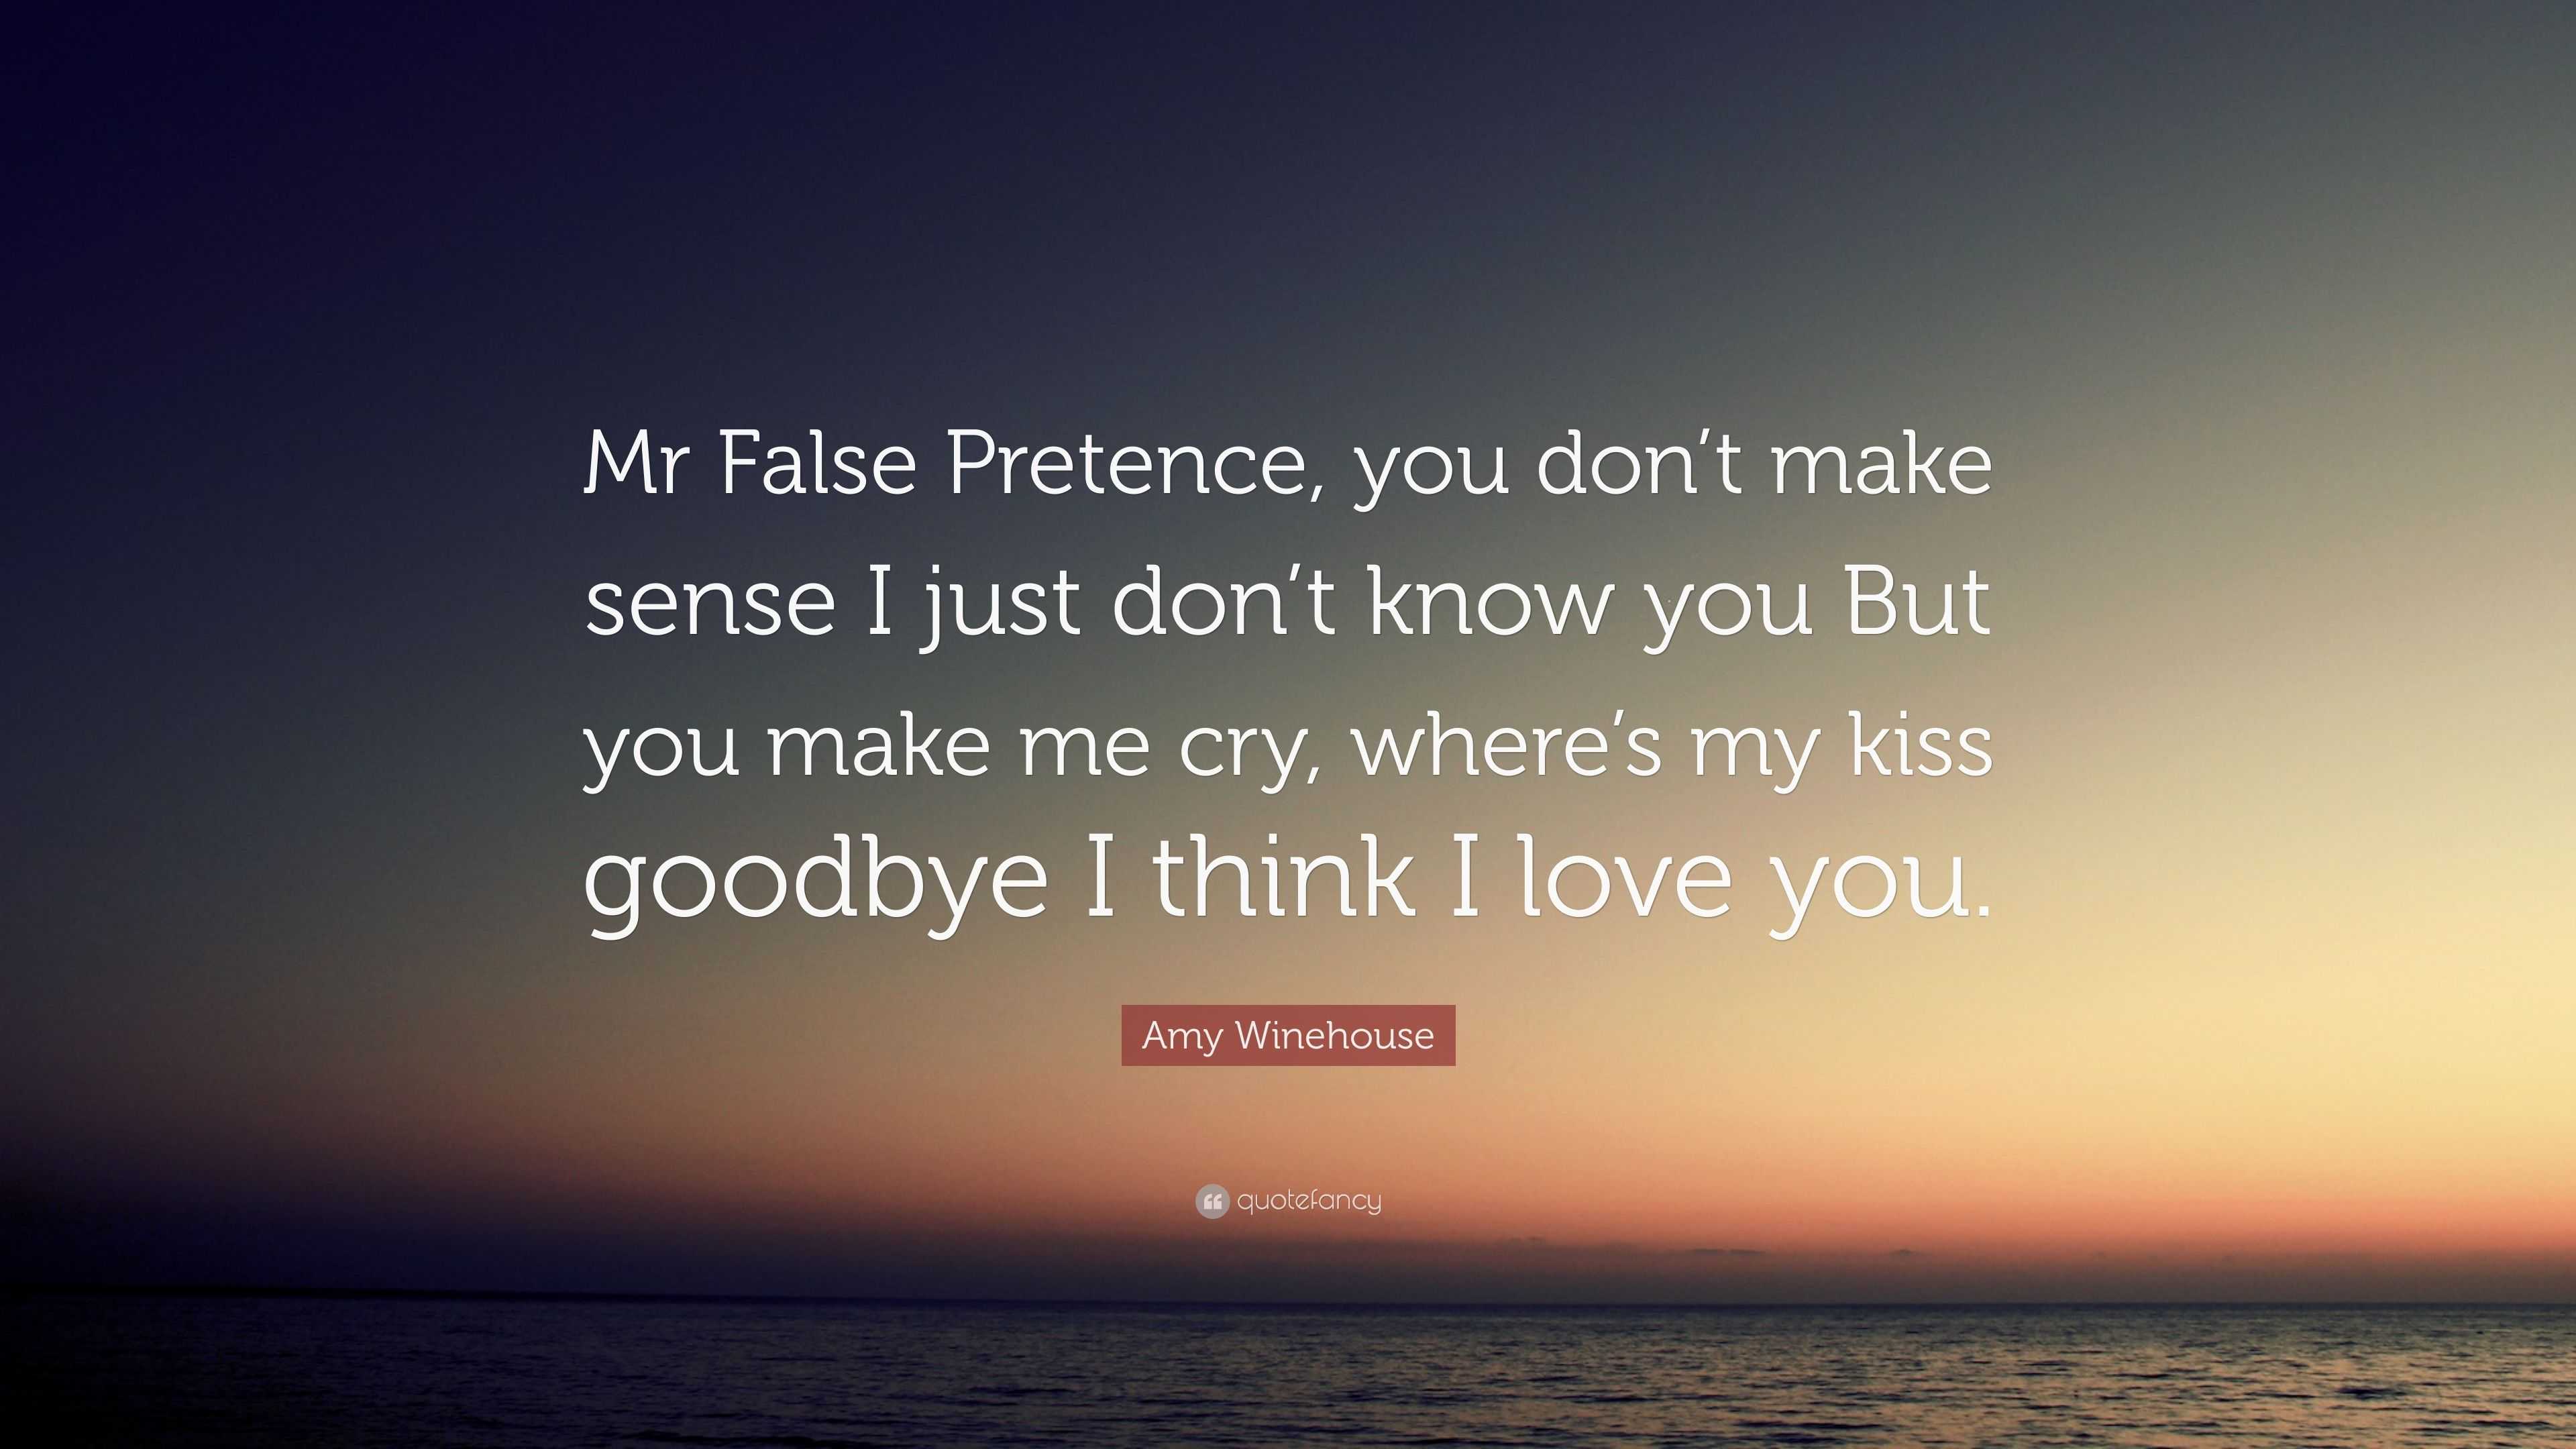 Amy Winehouse Quote “Mr False Pretence you don t make sense I